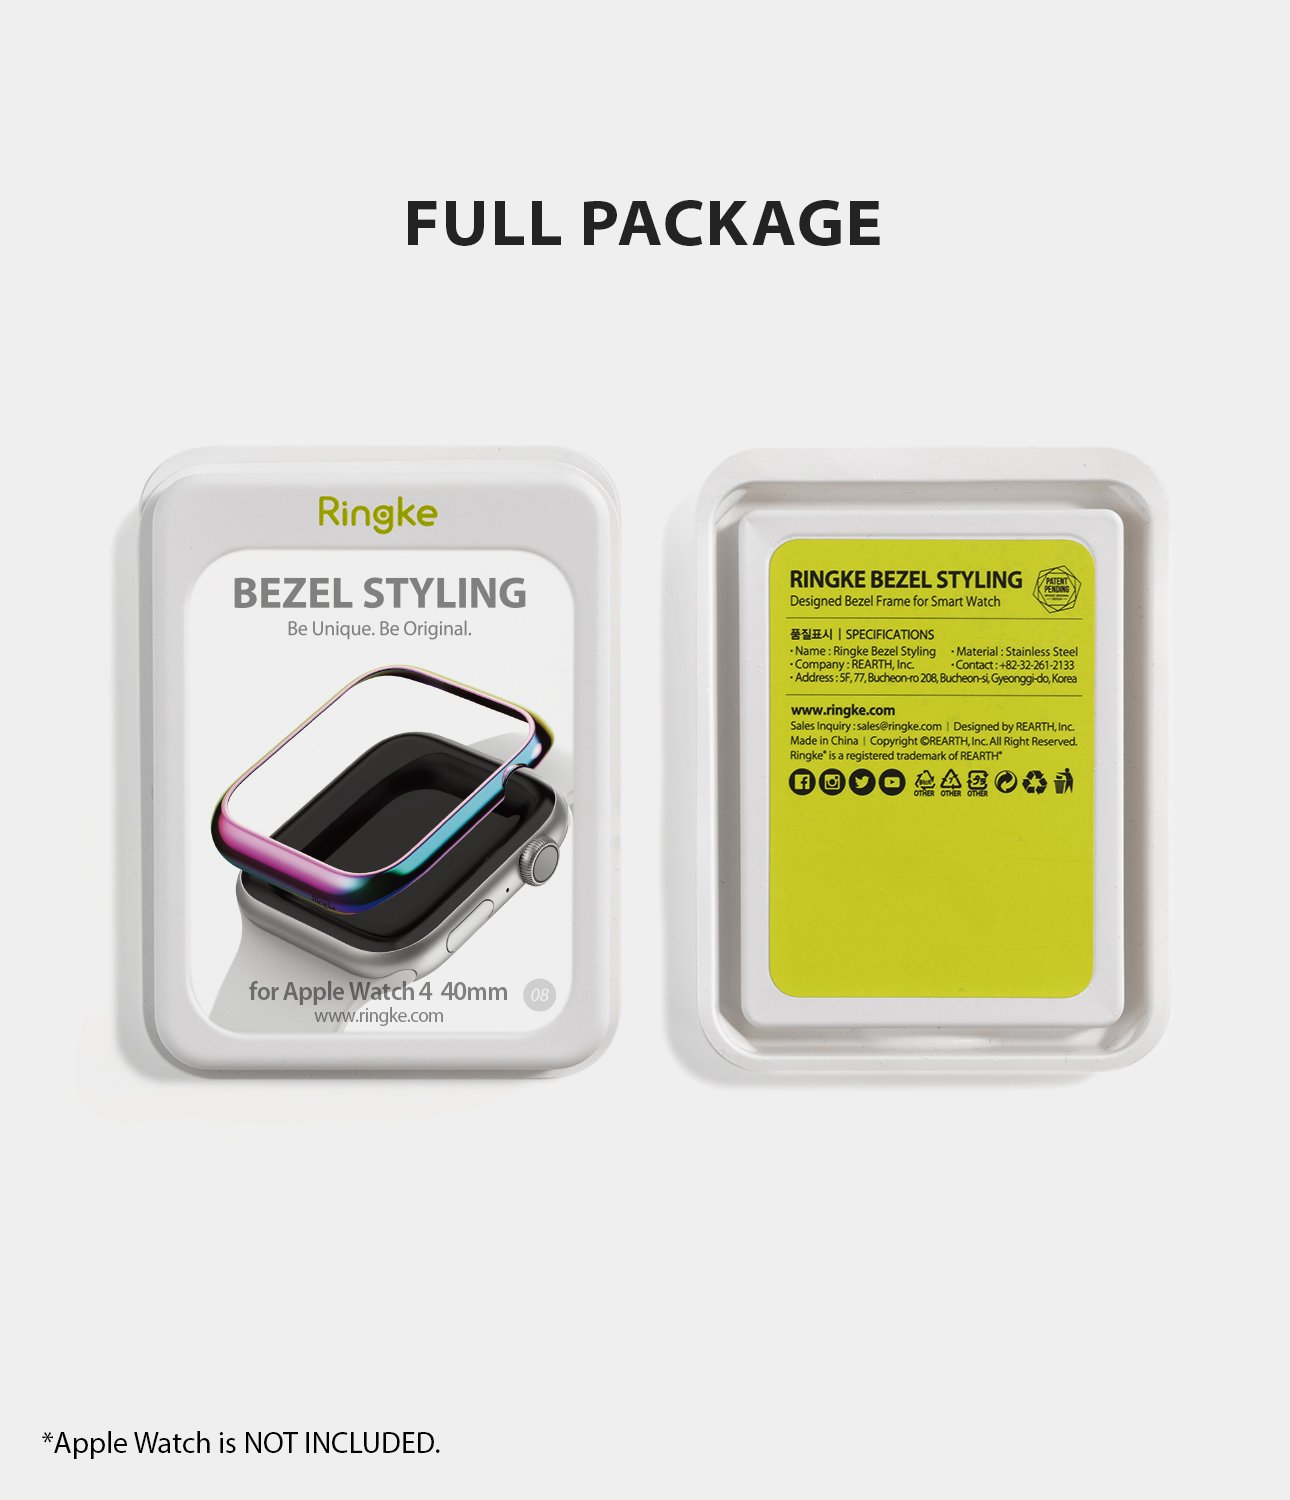 ringke bezel styling 40-08 neon chrome stainless steel on apple watch series 6 / 5 / 4 / SE 40mm full package